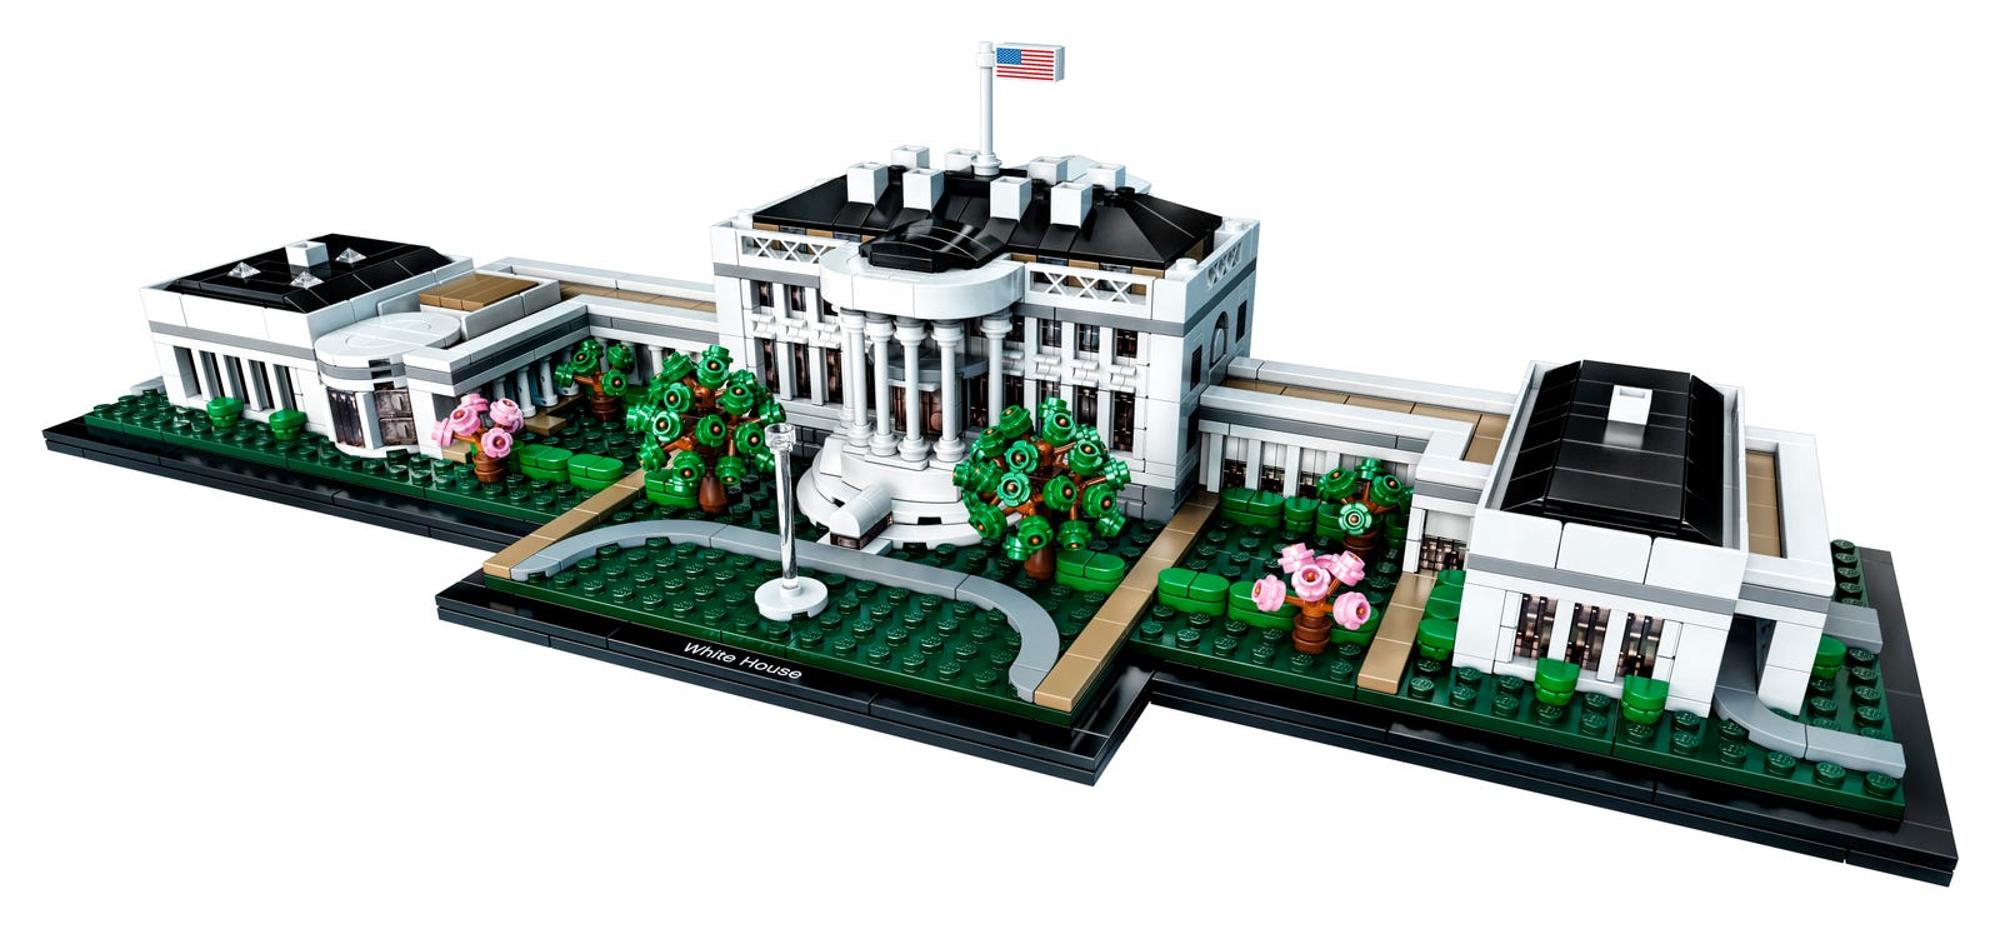 LEGO Architecture - The White House